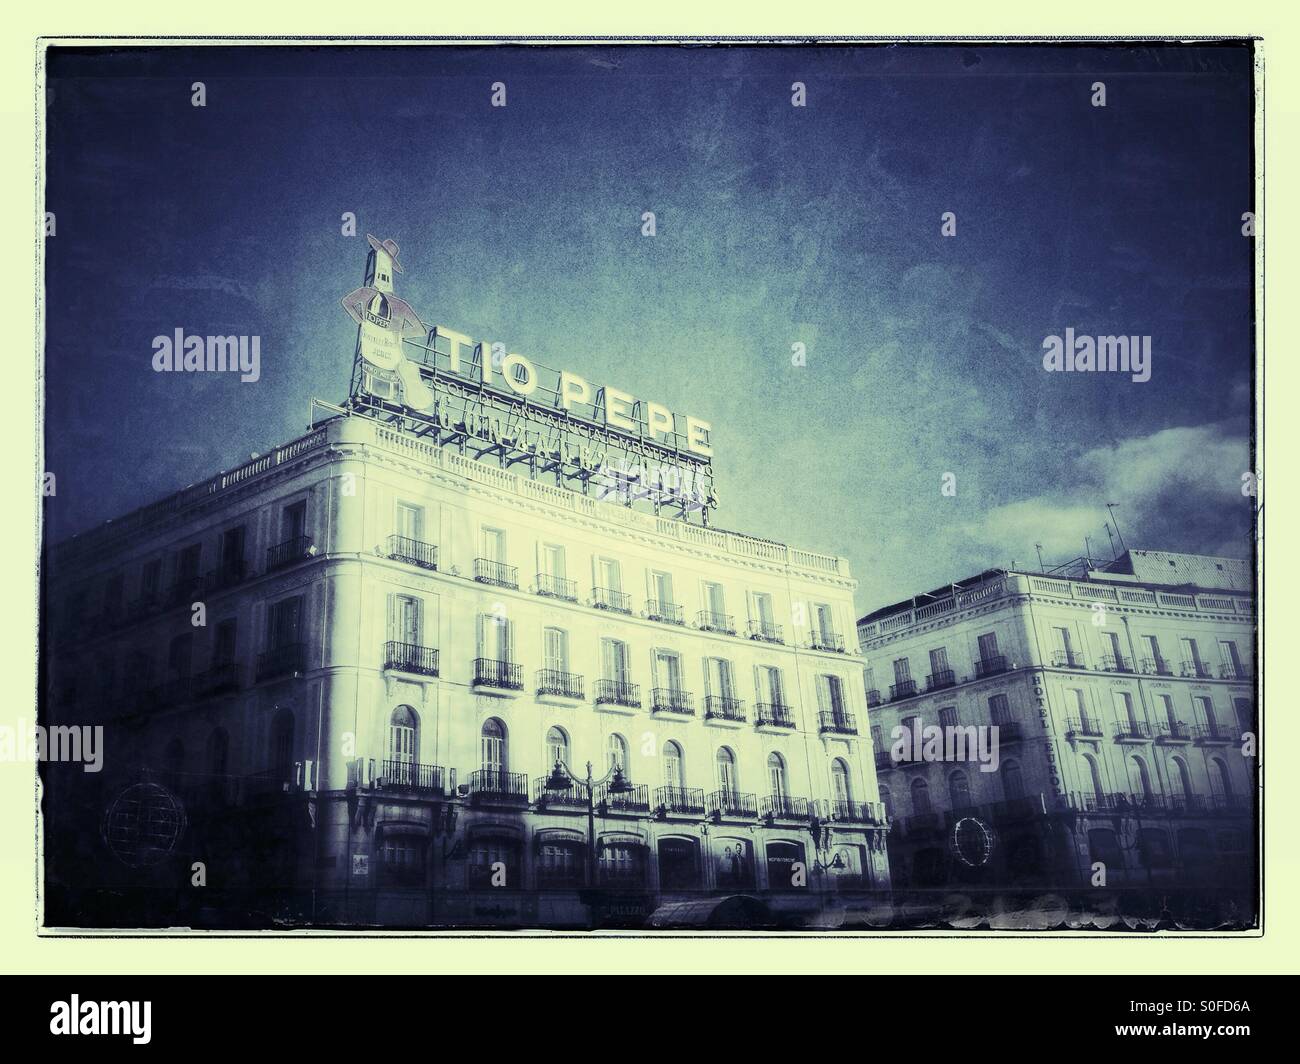 Tio Pepe Building a Madrid, Spagna Foto Stock